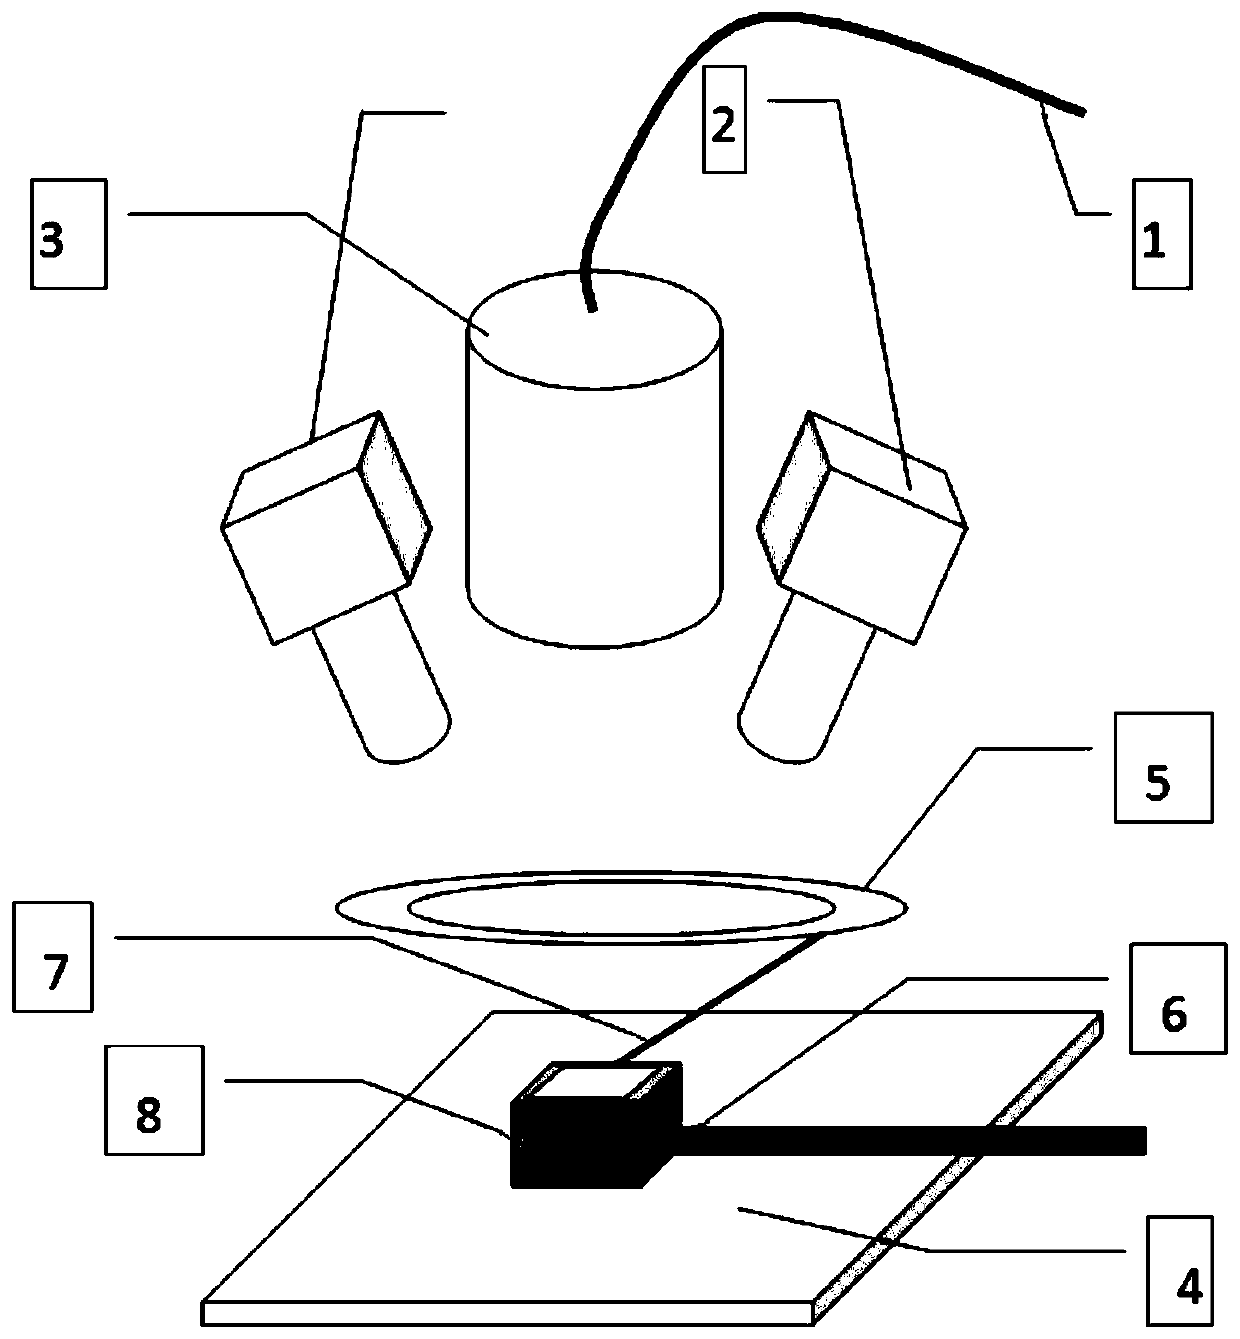 Connecting piece laser processing method based on binocular vision